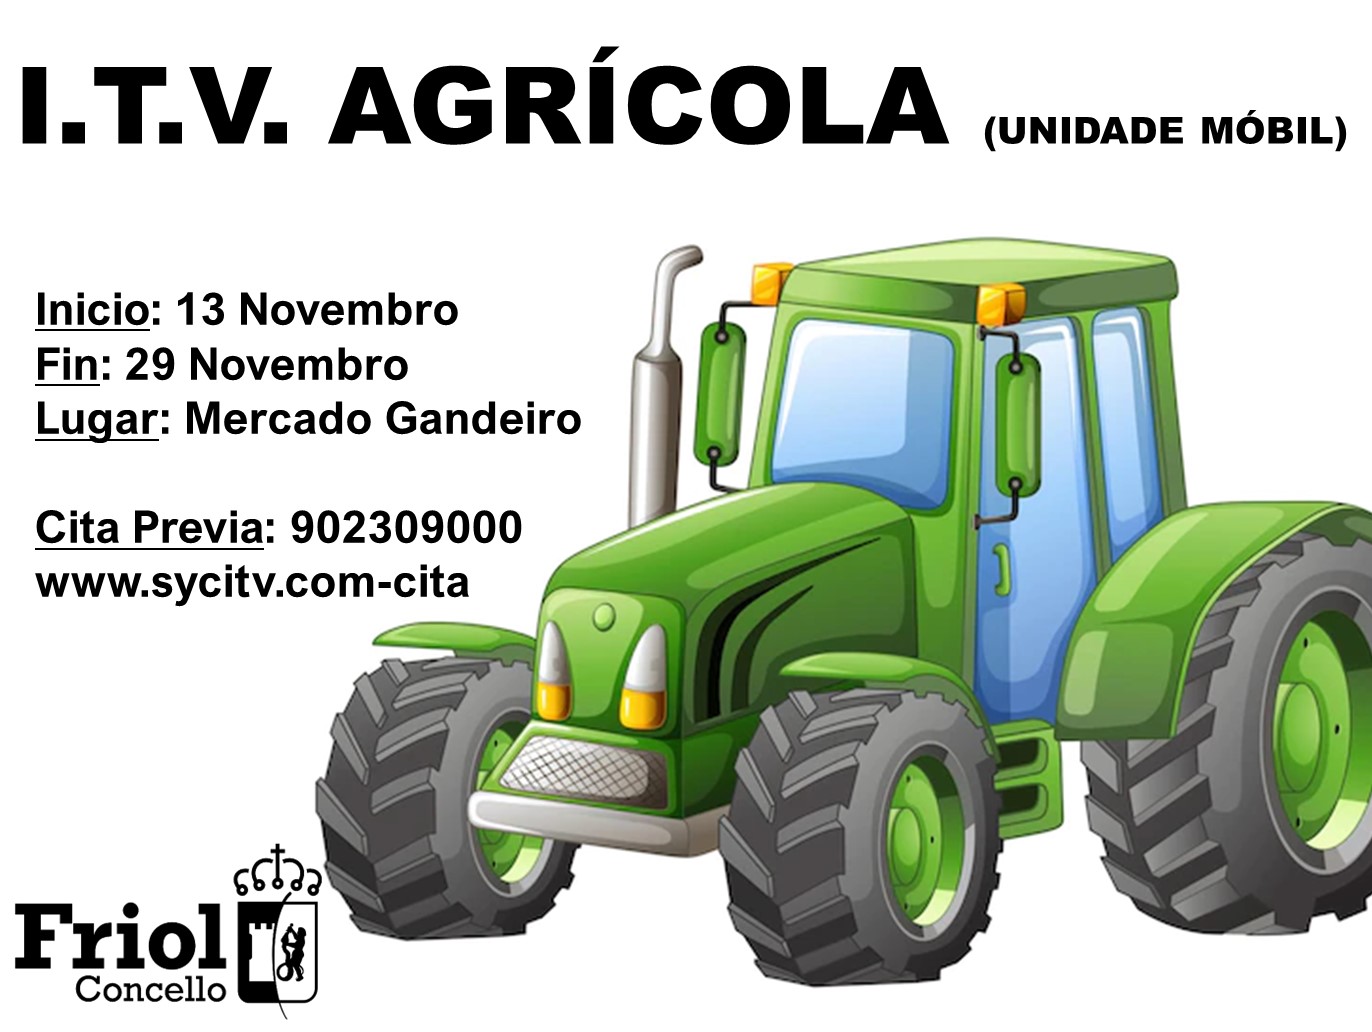 I.T.V Agrícola (Unidade móbil)